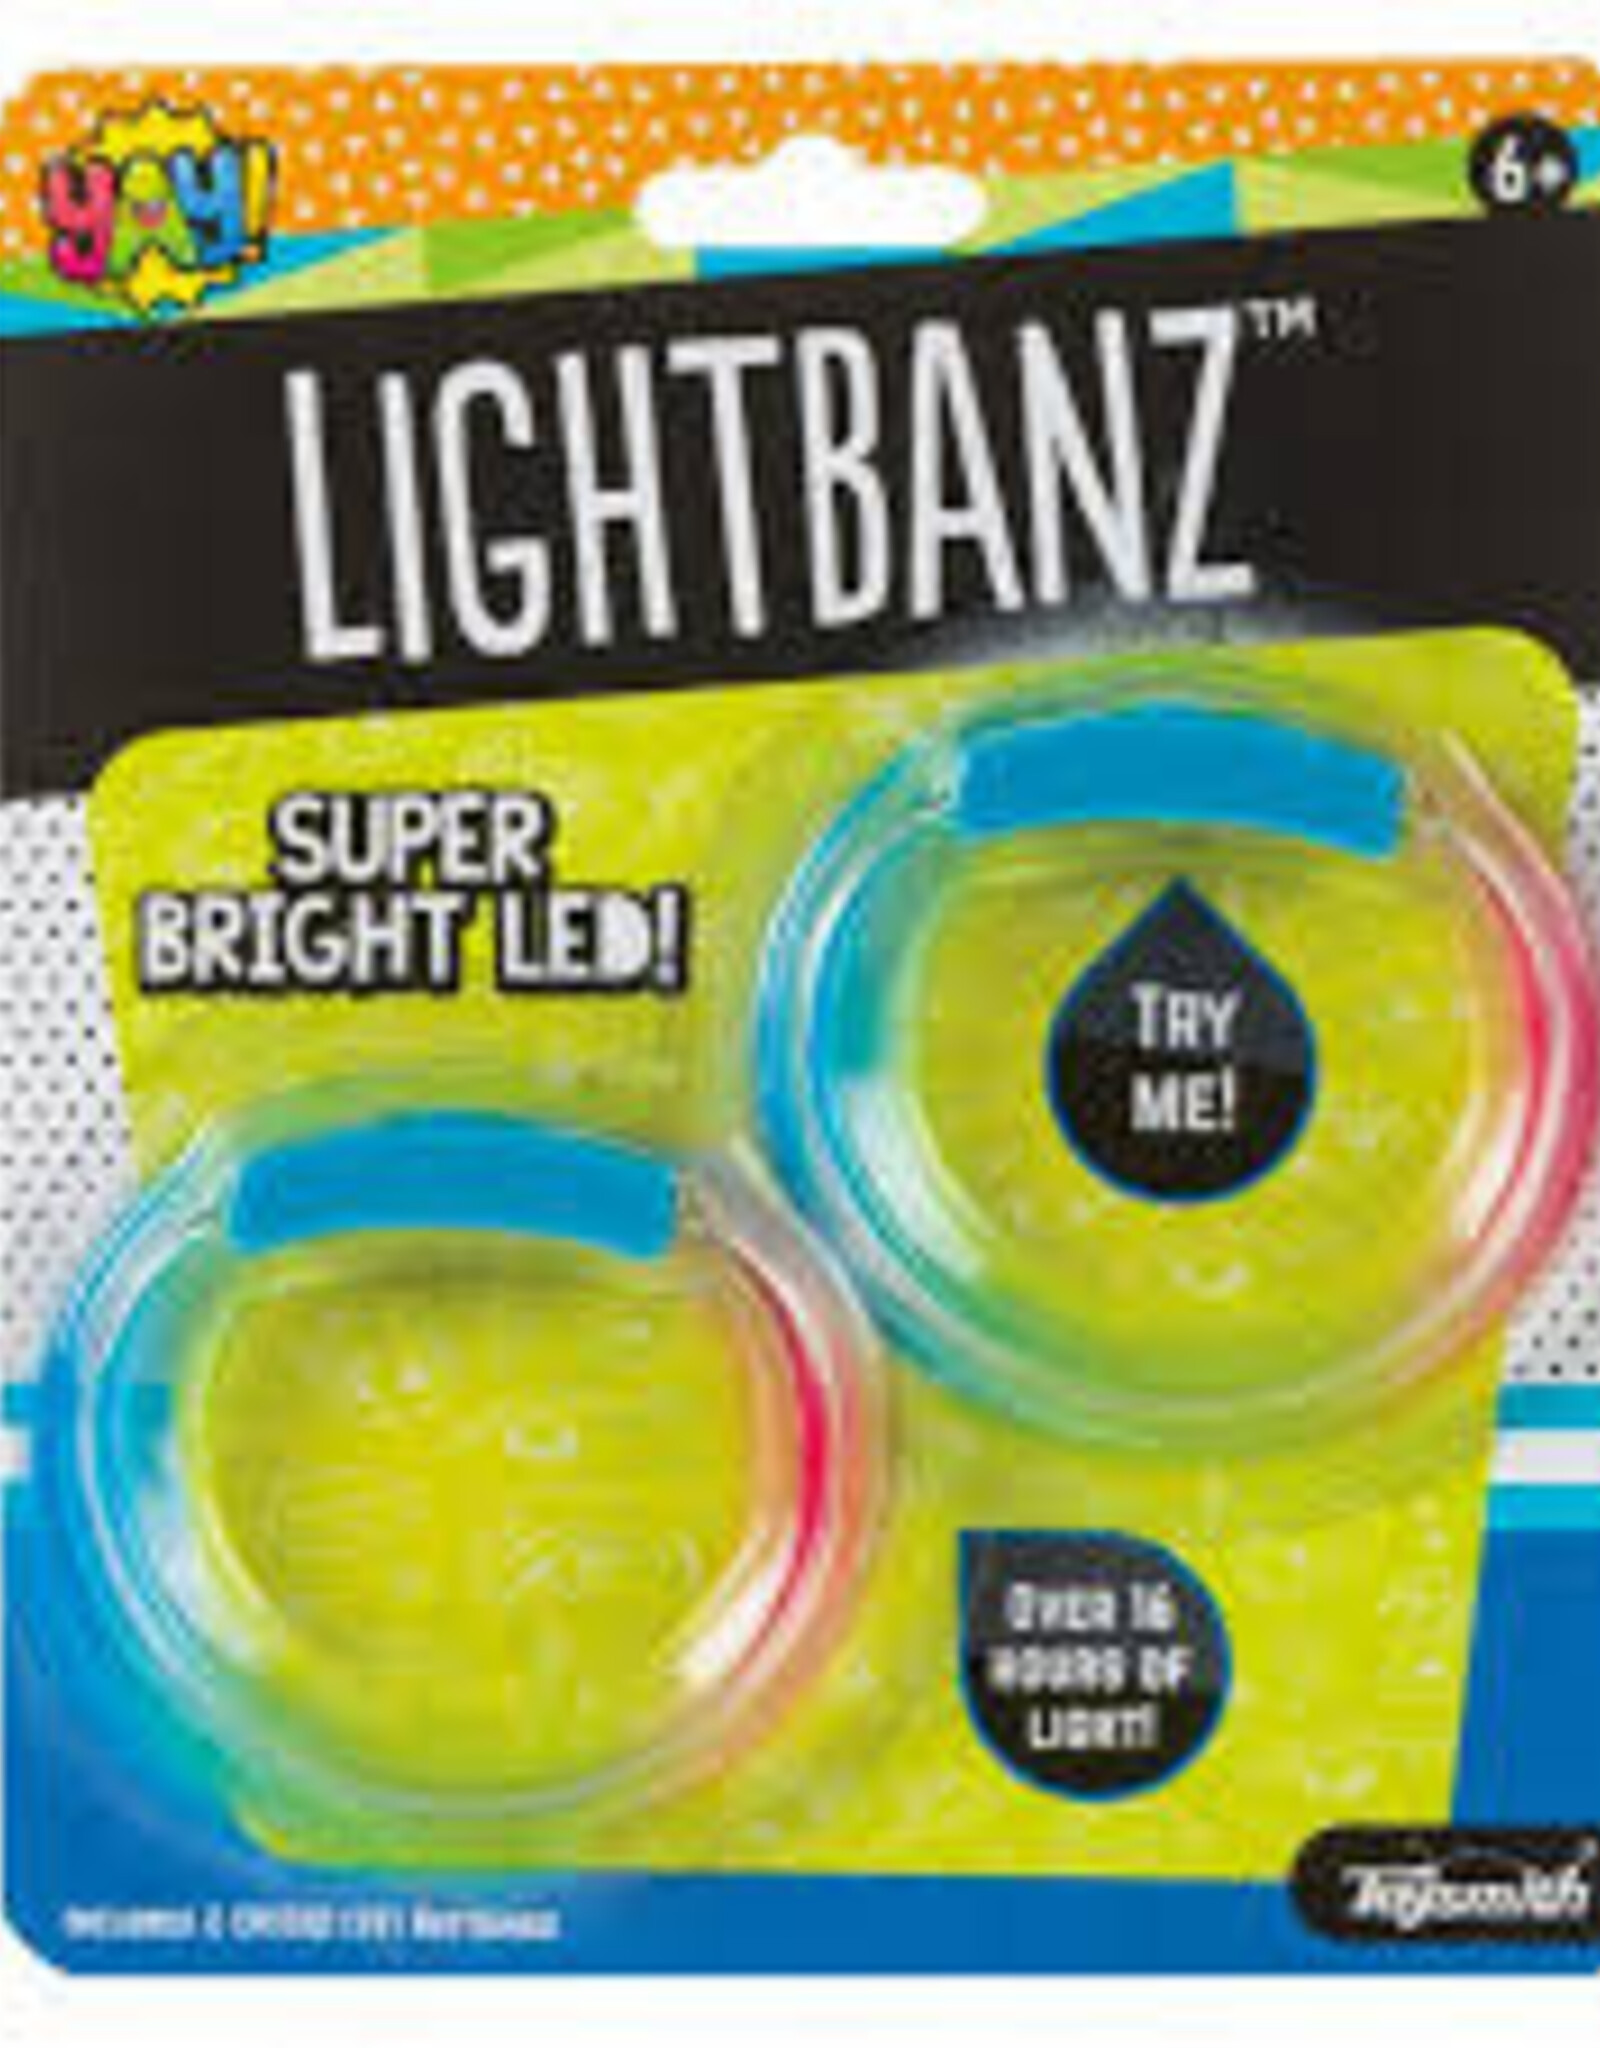 Toysmith Lightbanz - YAY